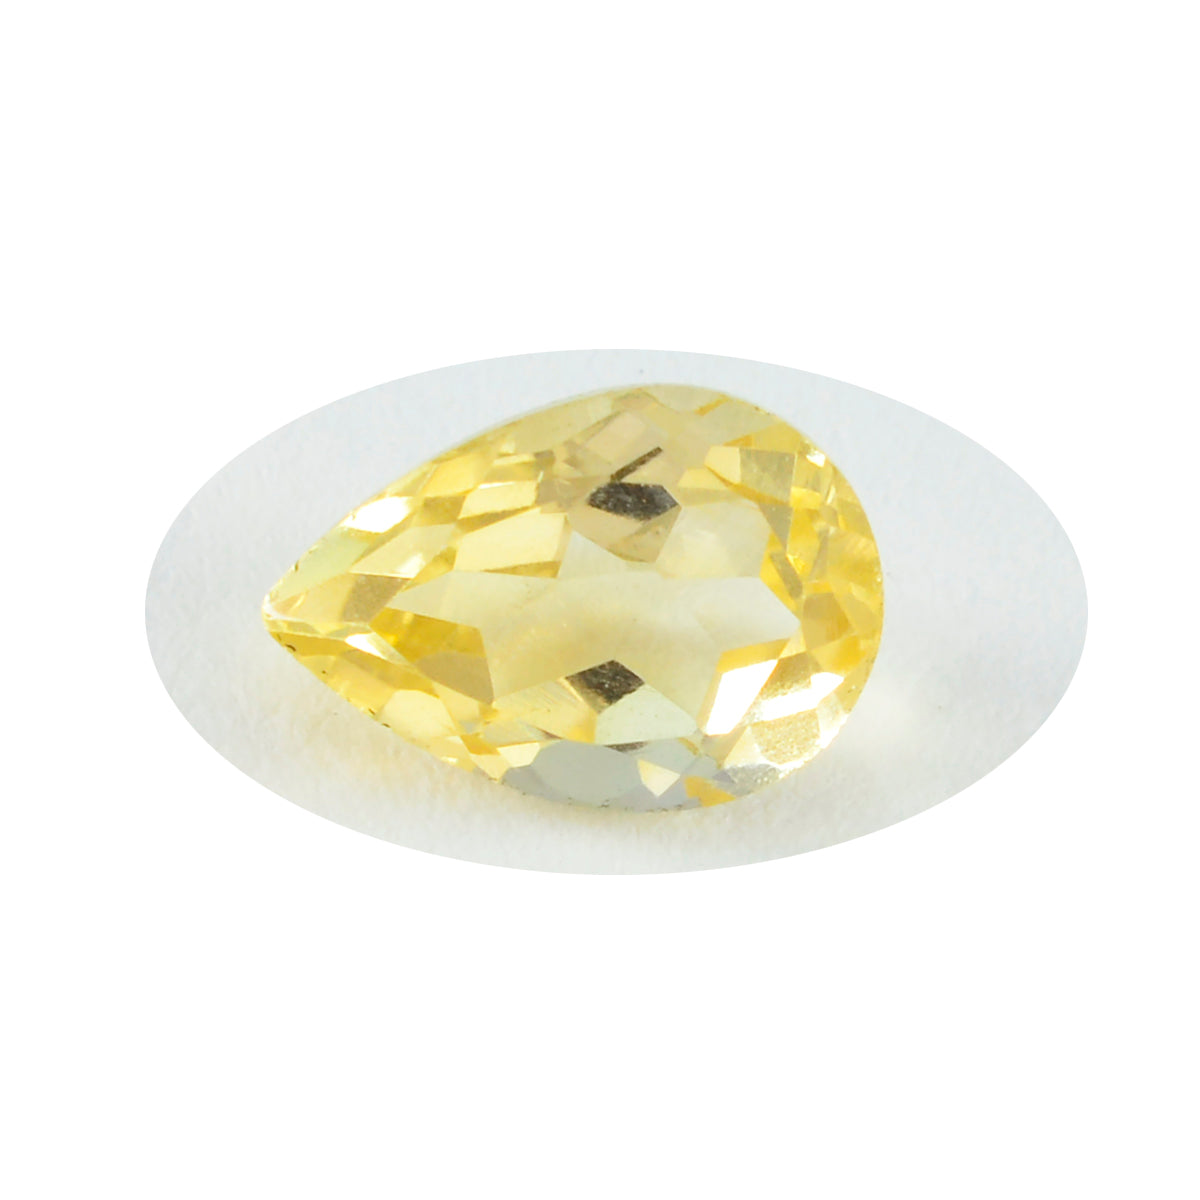 Riyogems 1PC Natural Yellow Citrine Faceted 7X10 mm Pear Shape fantastic Quality Gems